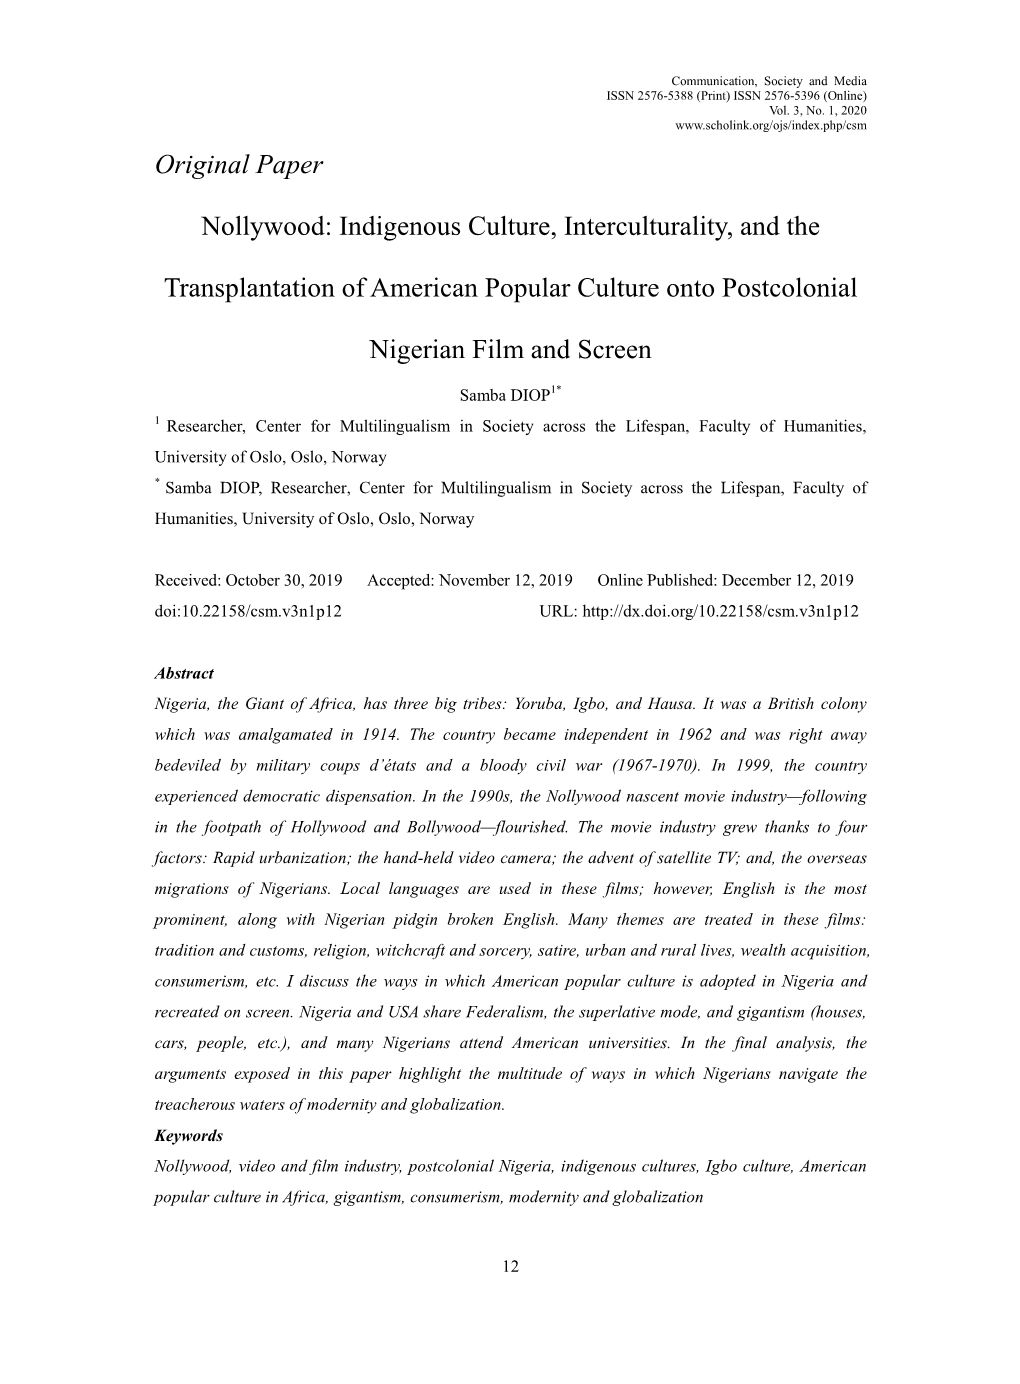 Original Paper Nollywood: Indigenous Culture, Interculturality, and The